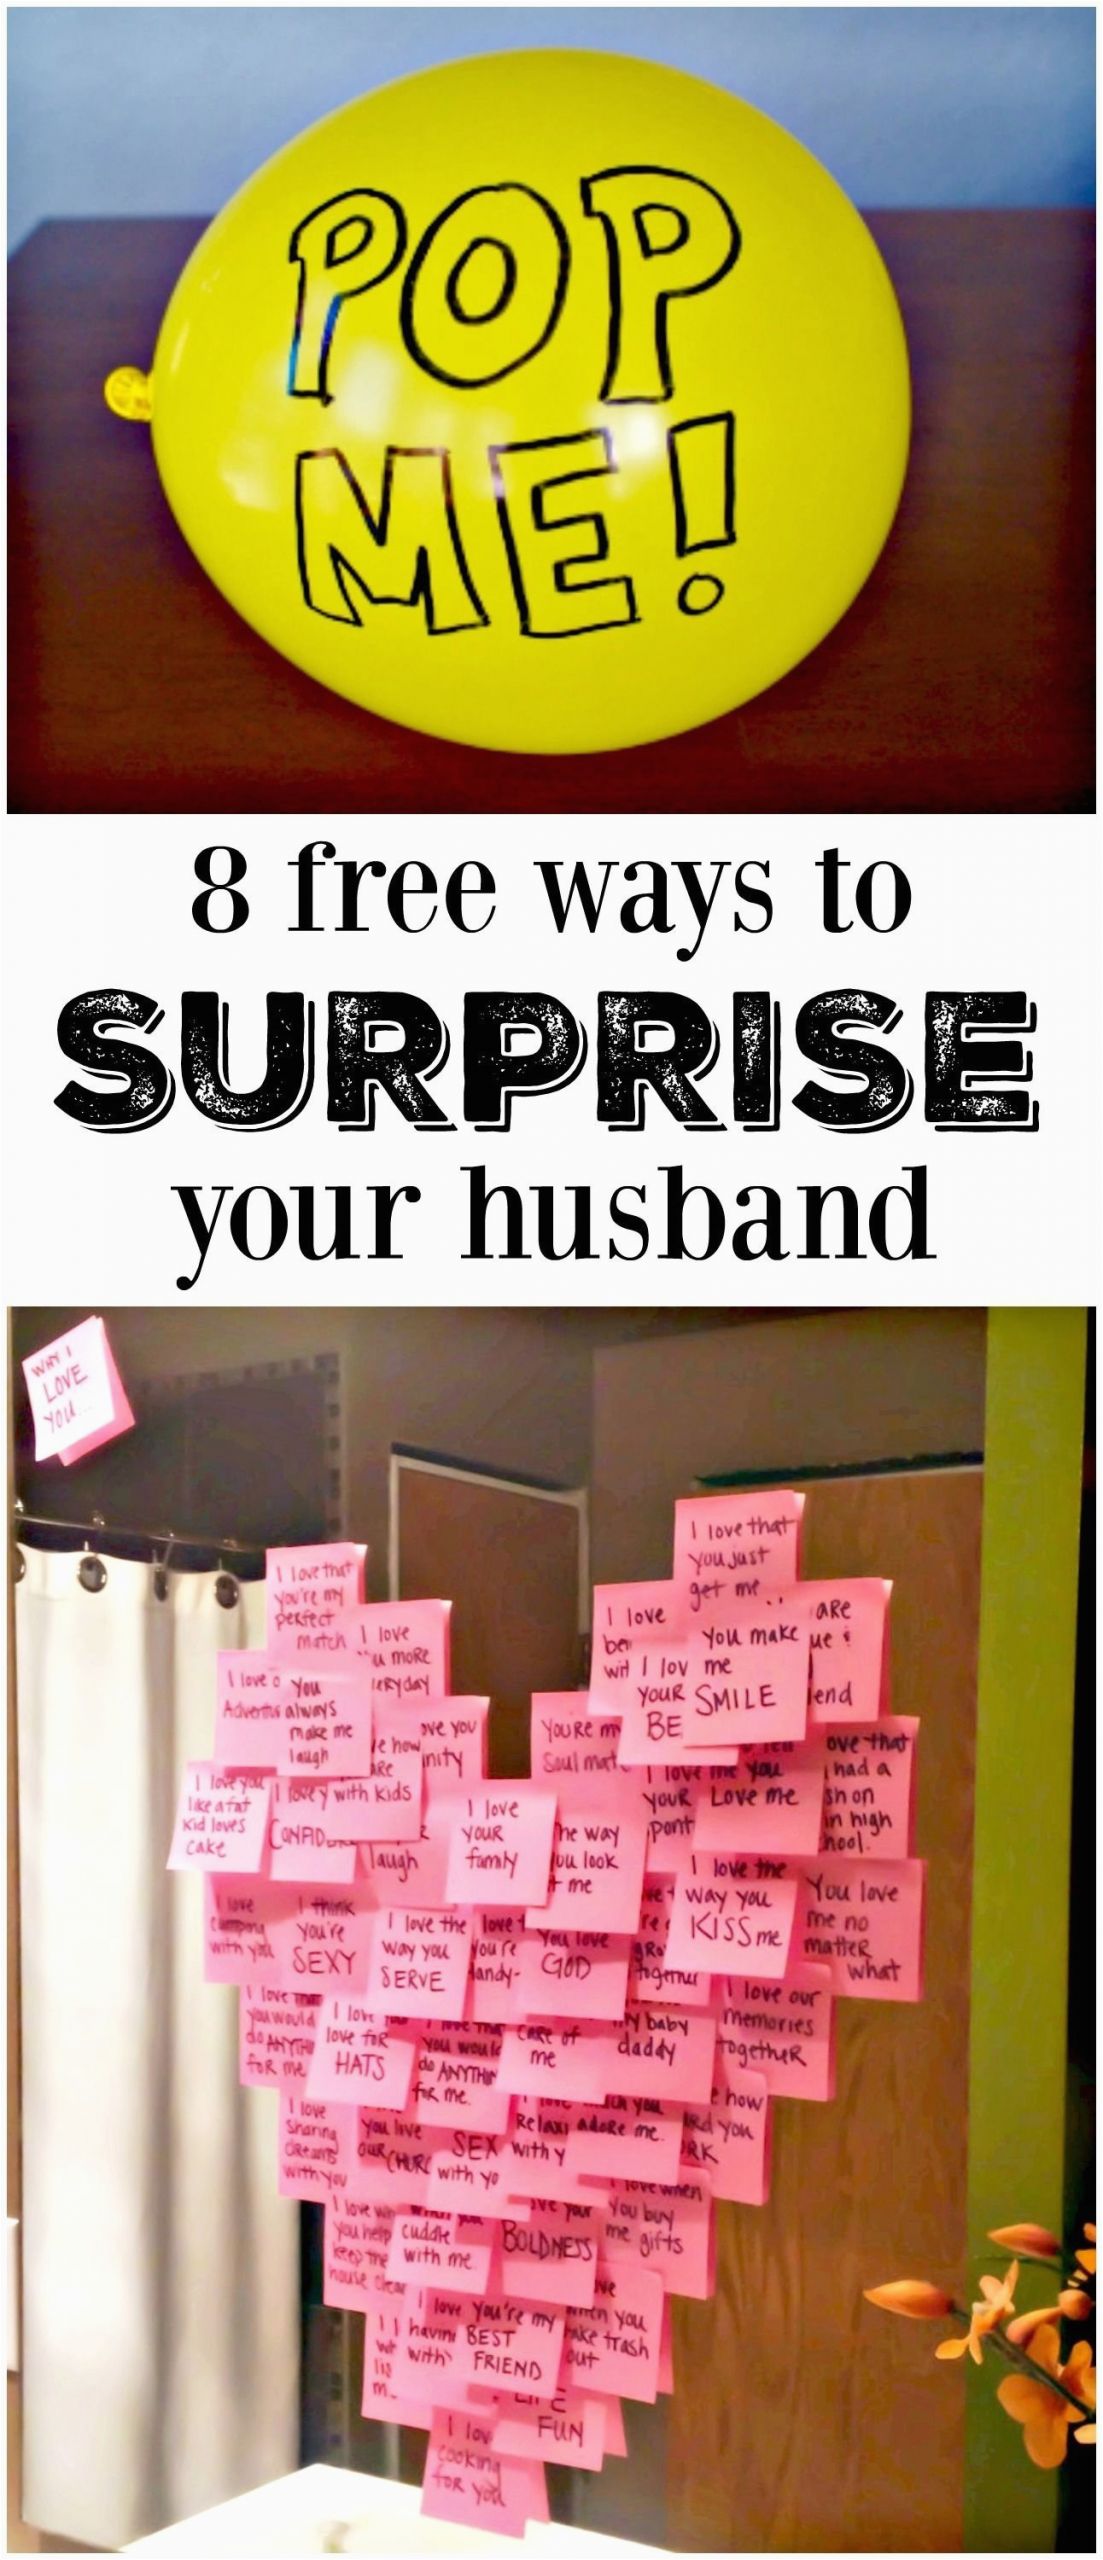 10 amazing creative birthday ideas for husband